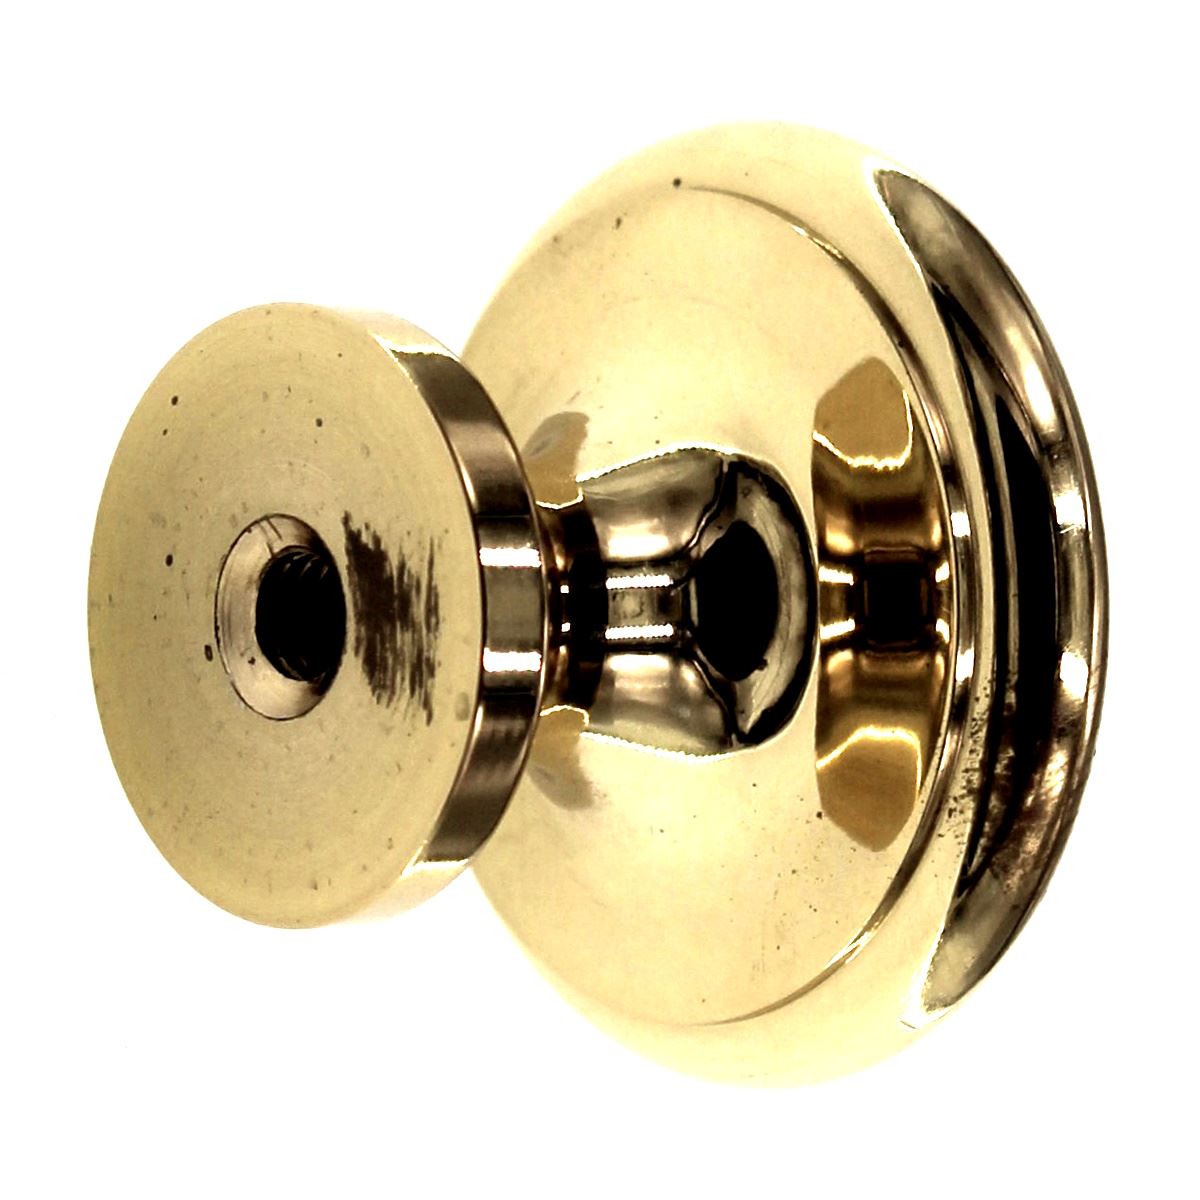 FKI Hardware Period Brass 1 1/4" Ringed Cabinet Knob Polished Solid Brass K21